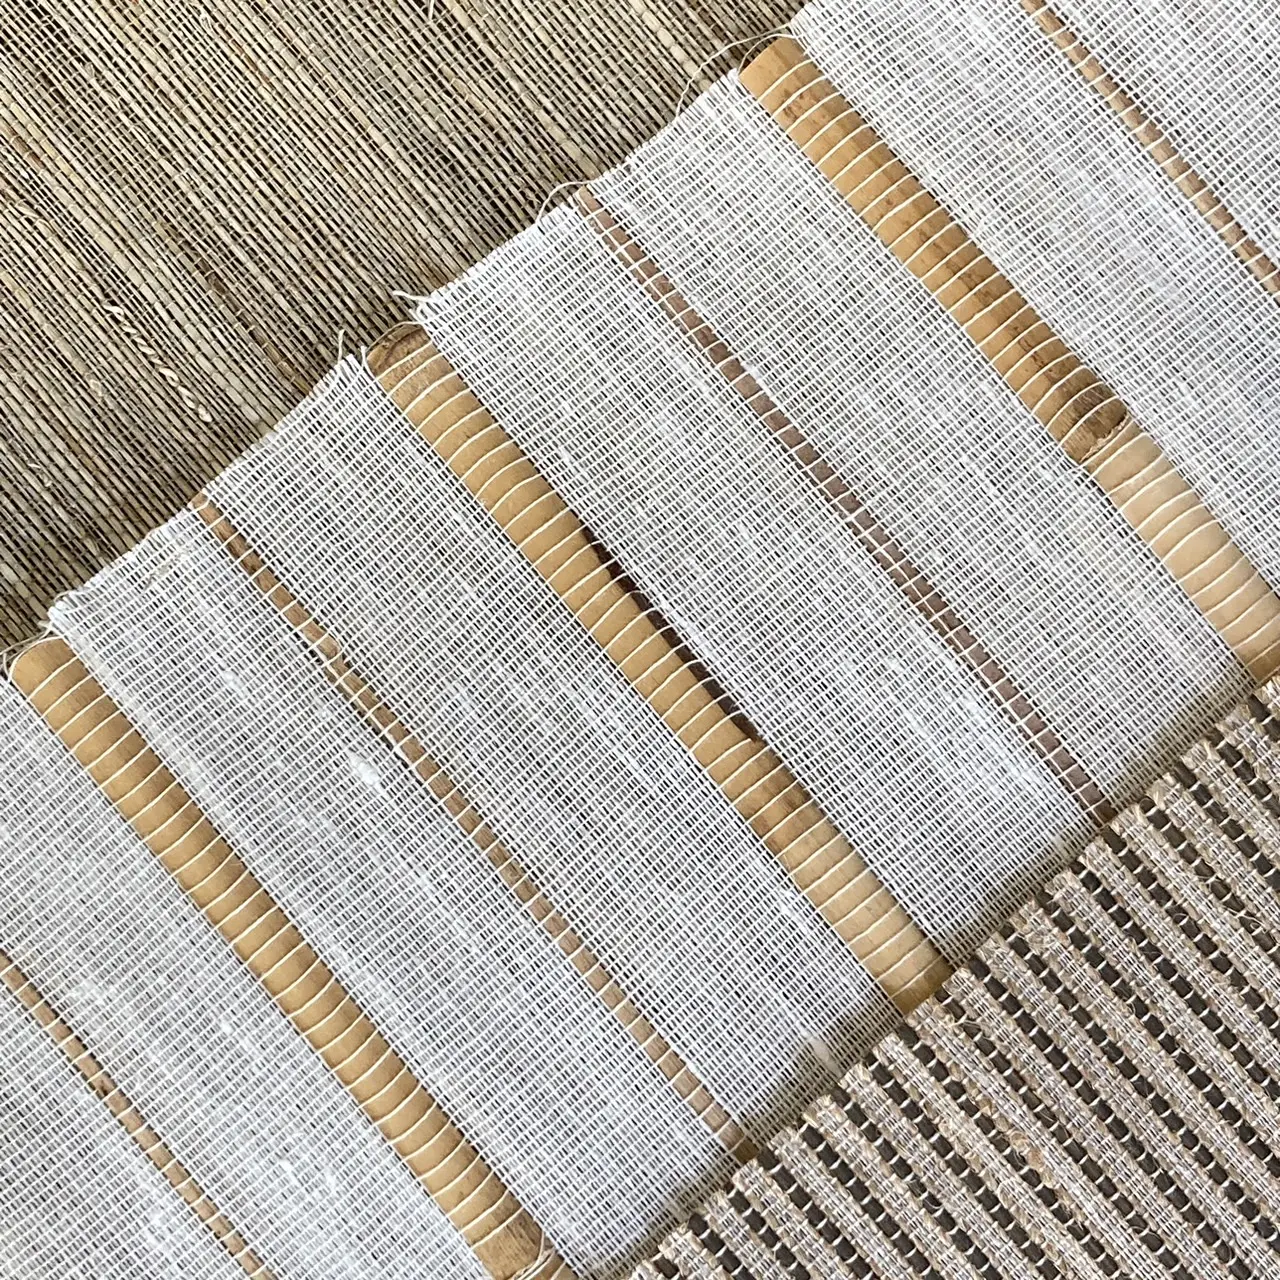 Jute Material Roman Blind with 90% Linen+10% Bamboo Fiber